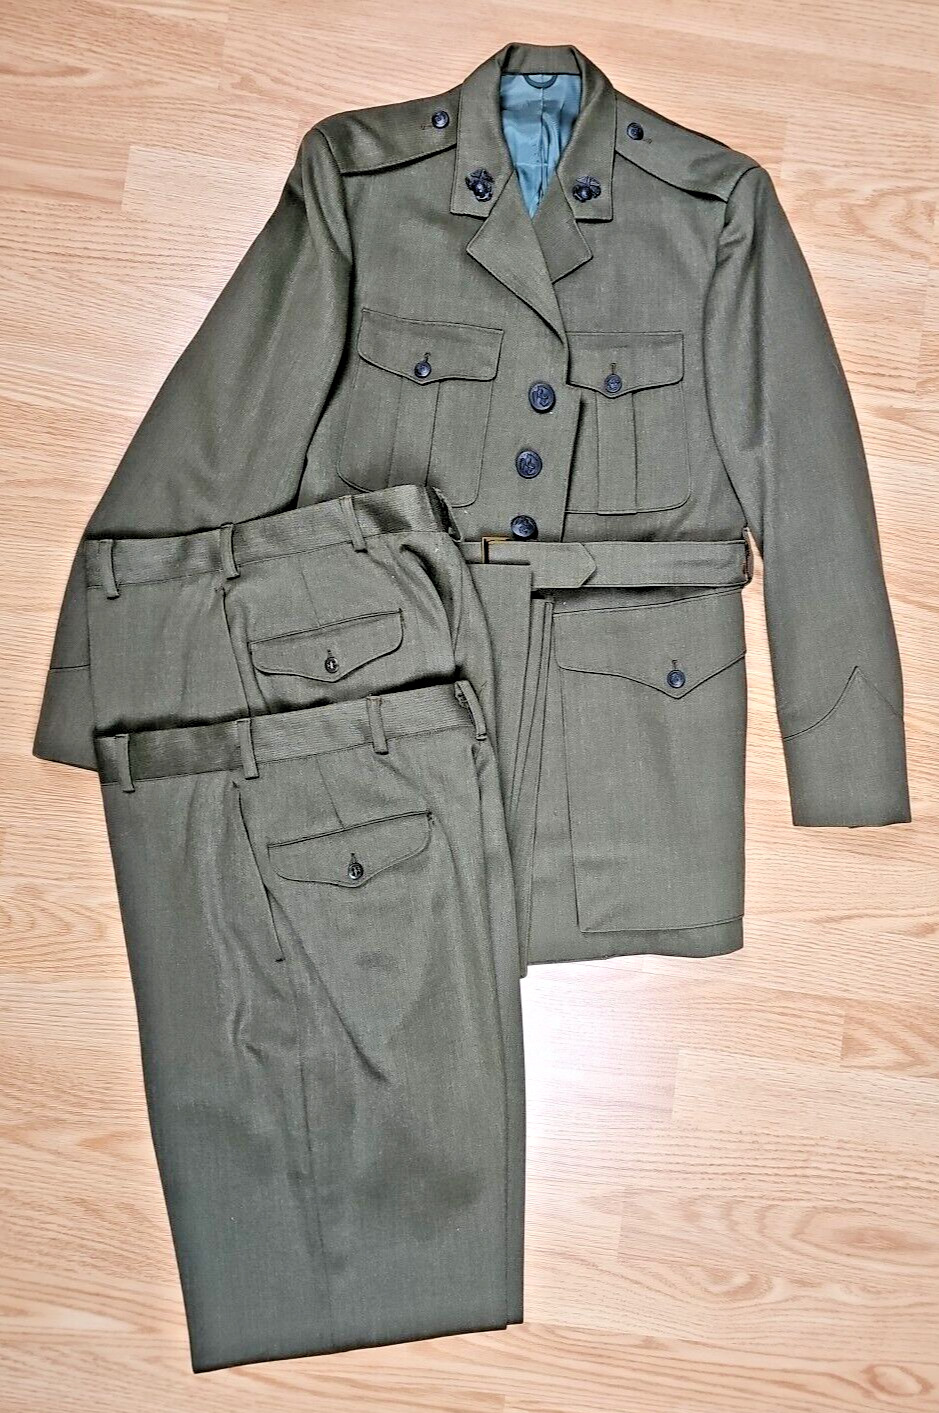 USMC Officer Uniform Dress Green Coat 2 Trousers Vietnam Era Original